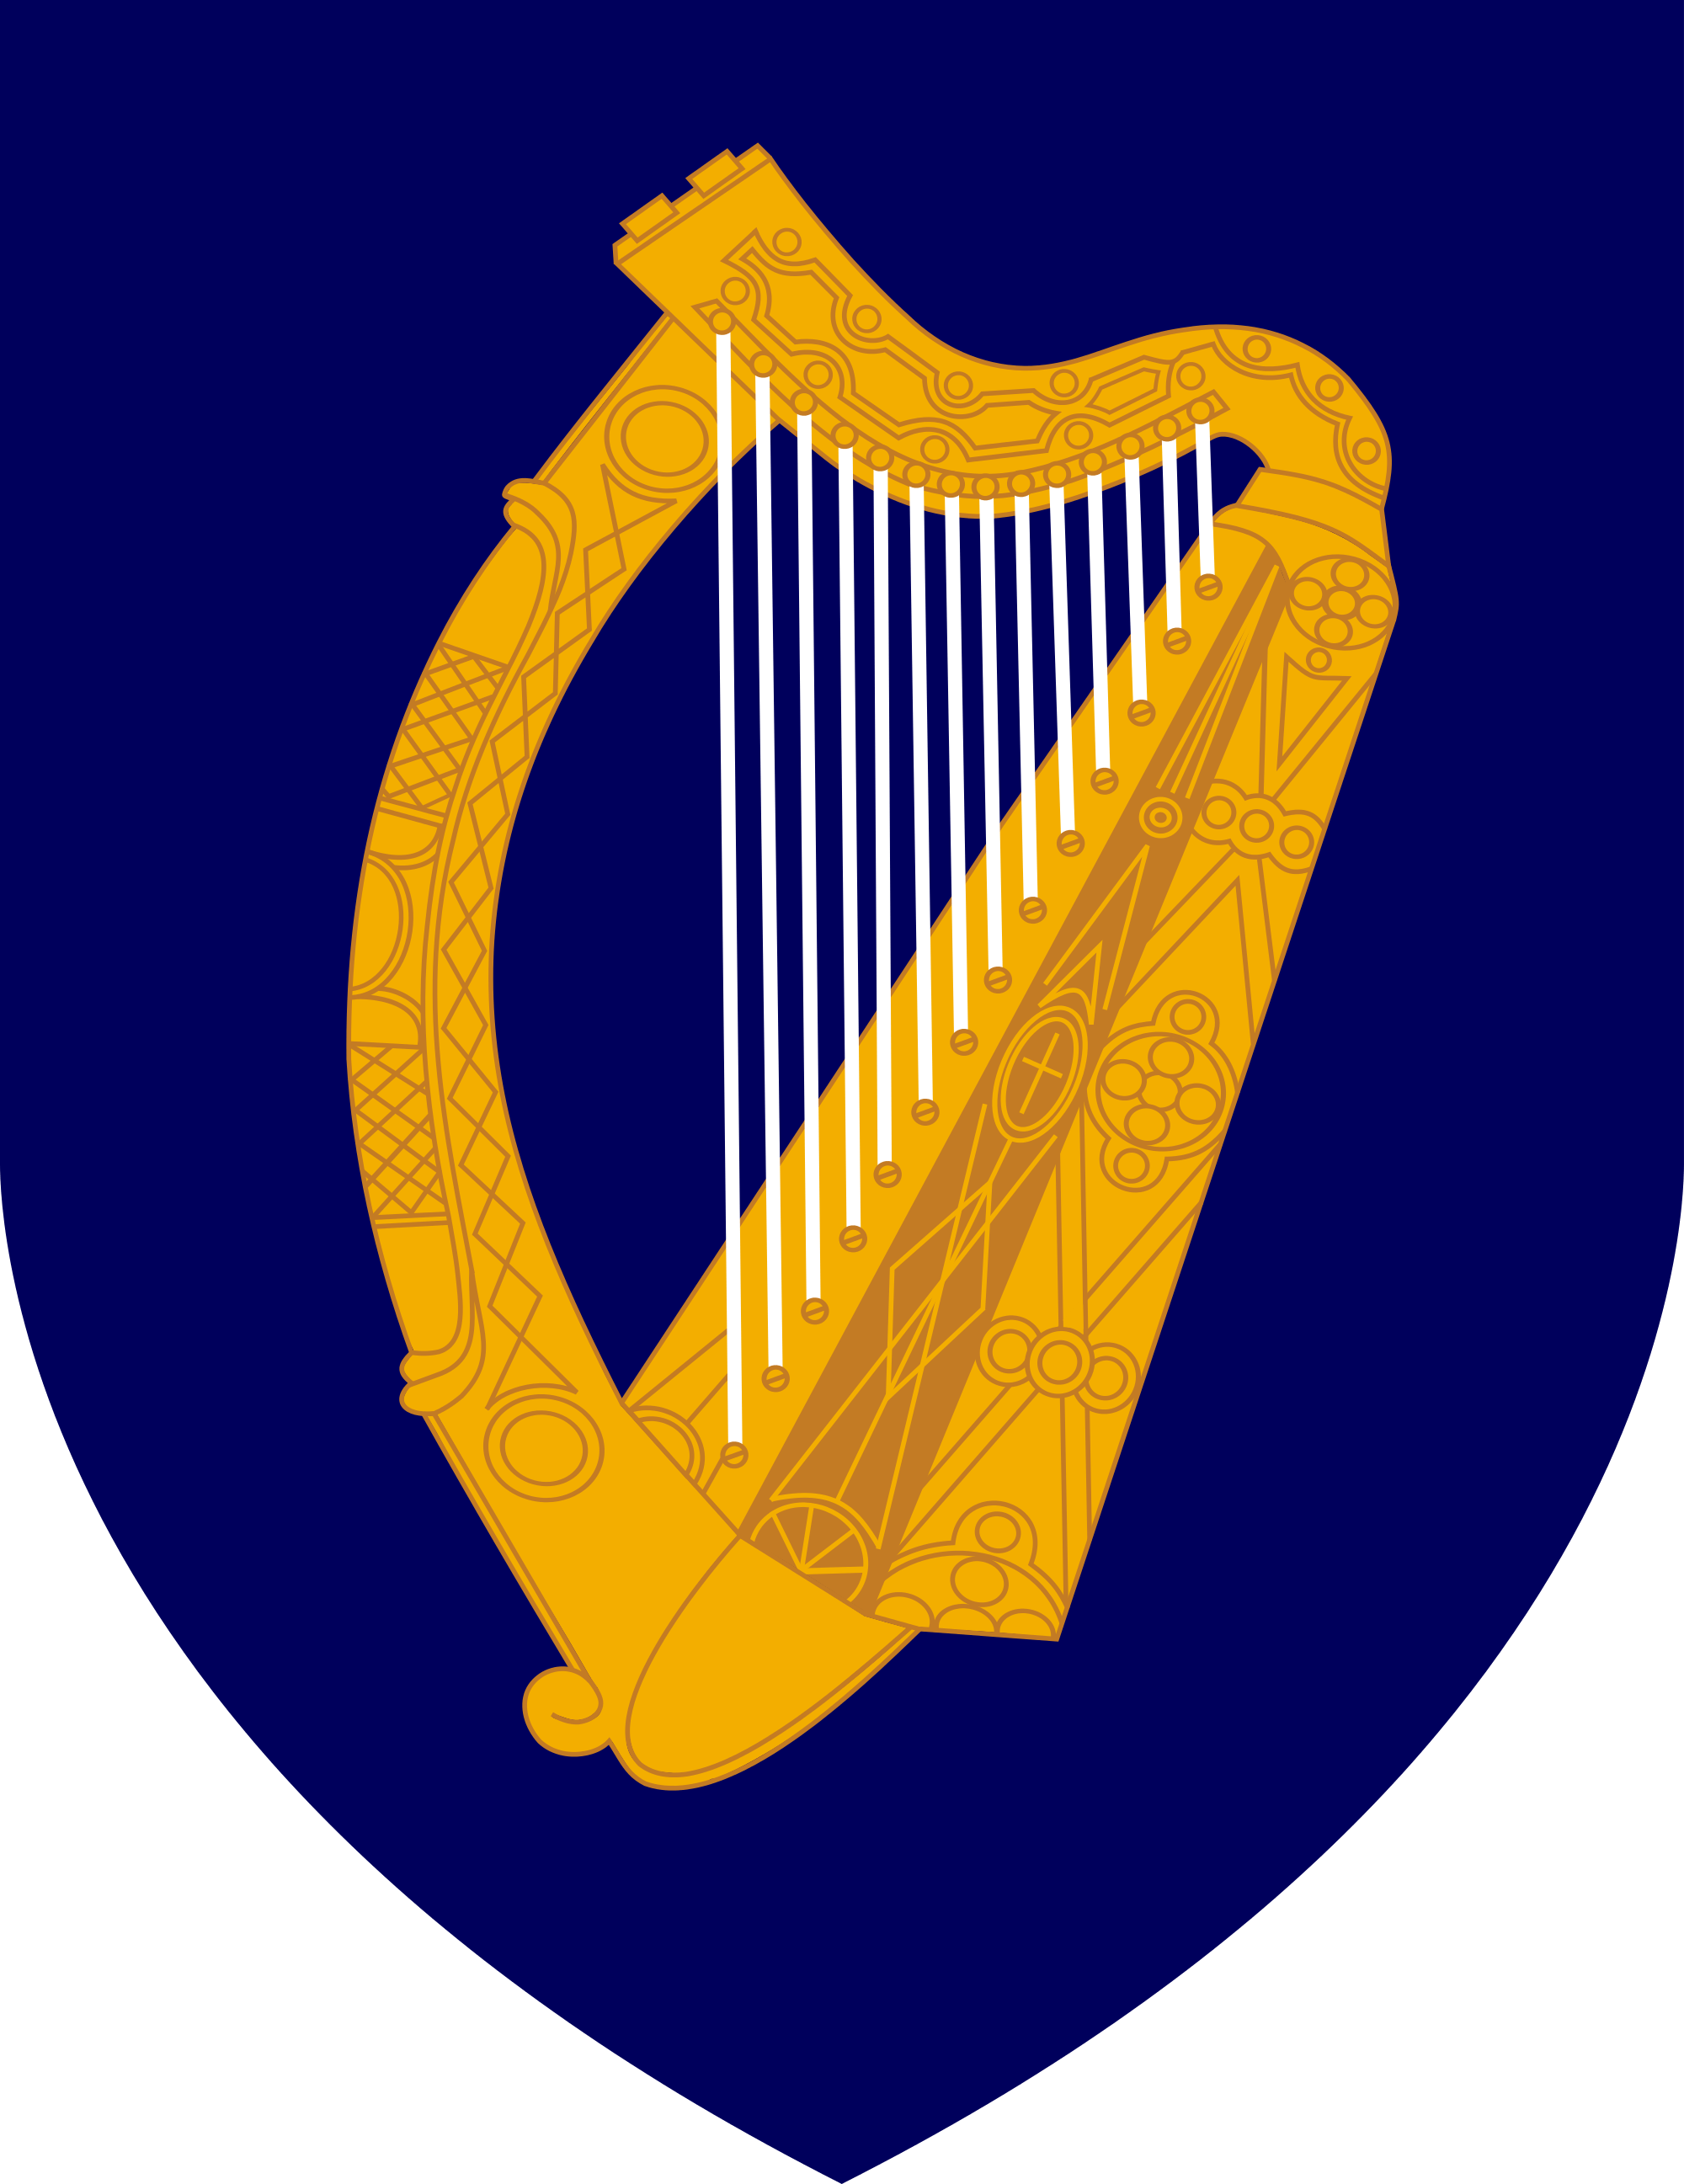 Harp of Ireland Logo - Coat of arms of Ireland